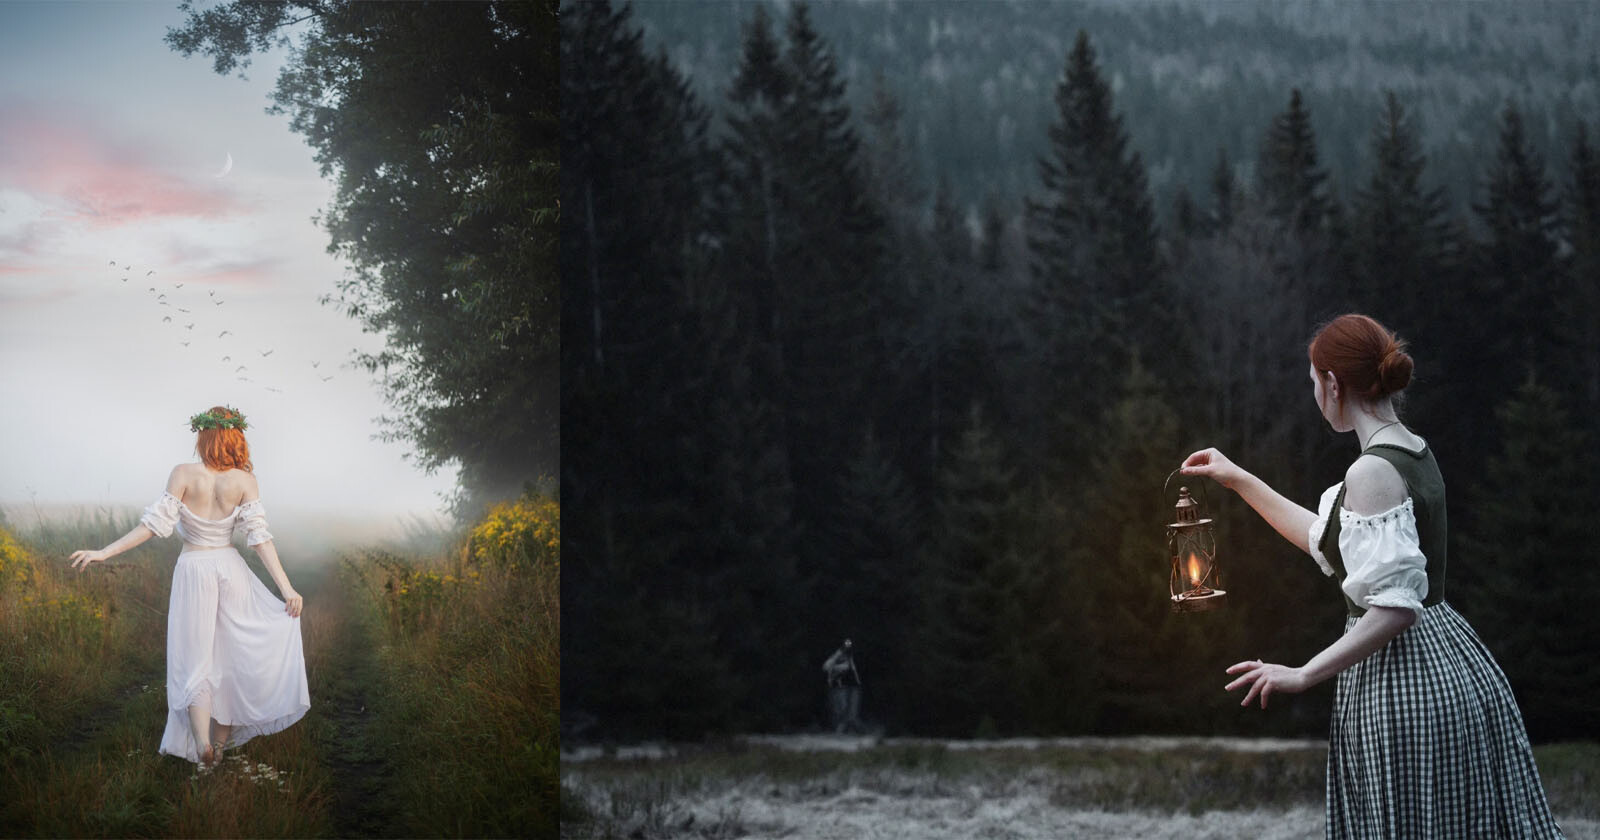 Photographers Mystifying Images are Based on Polish and Celtic Folklore